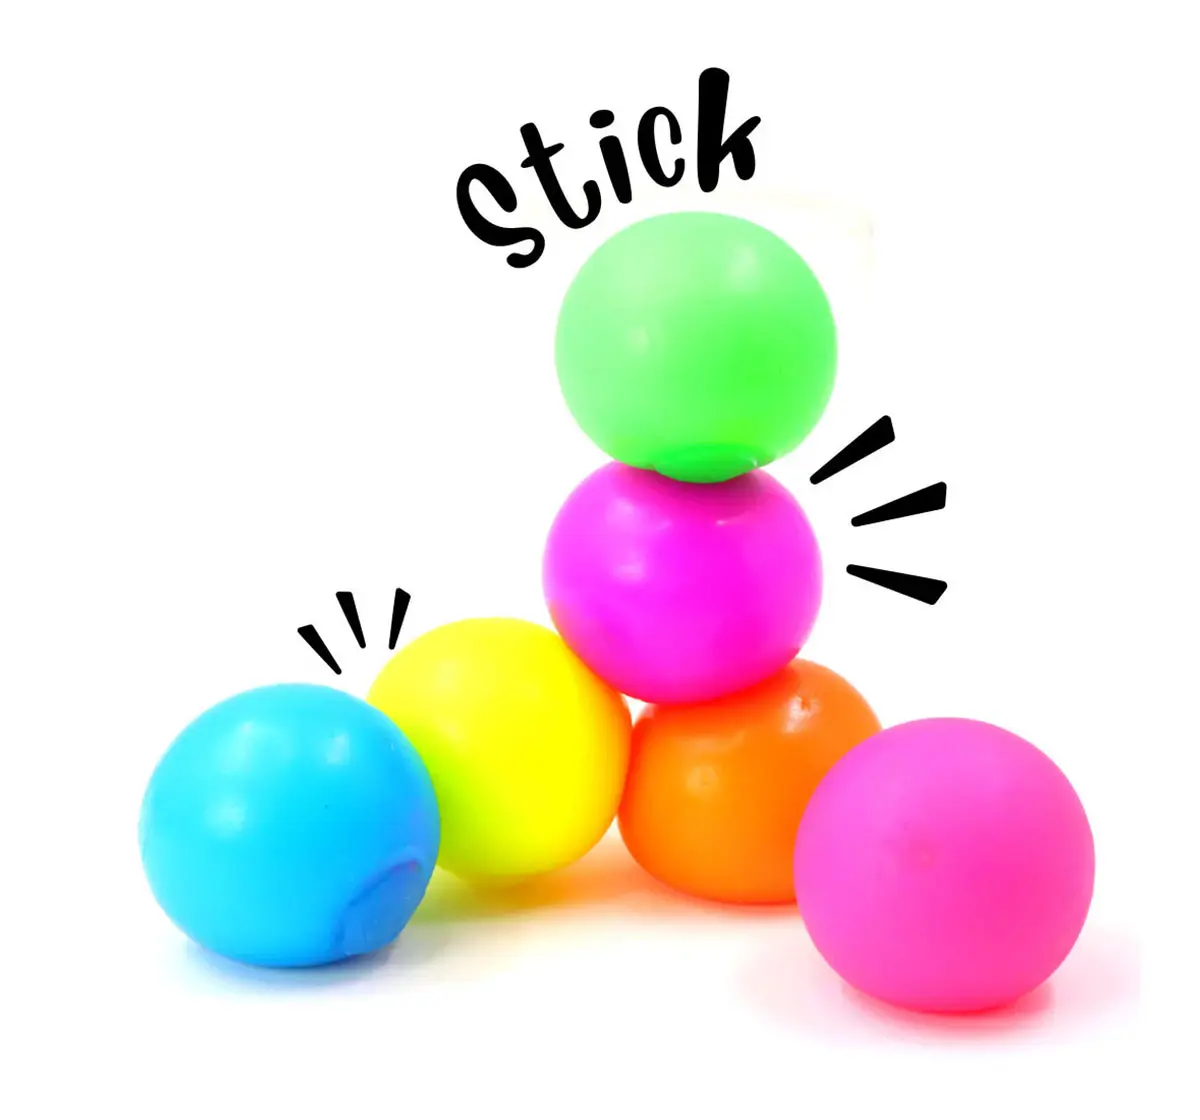 Scoobies Glow Balls Multicolour, 3Y+